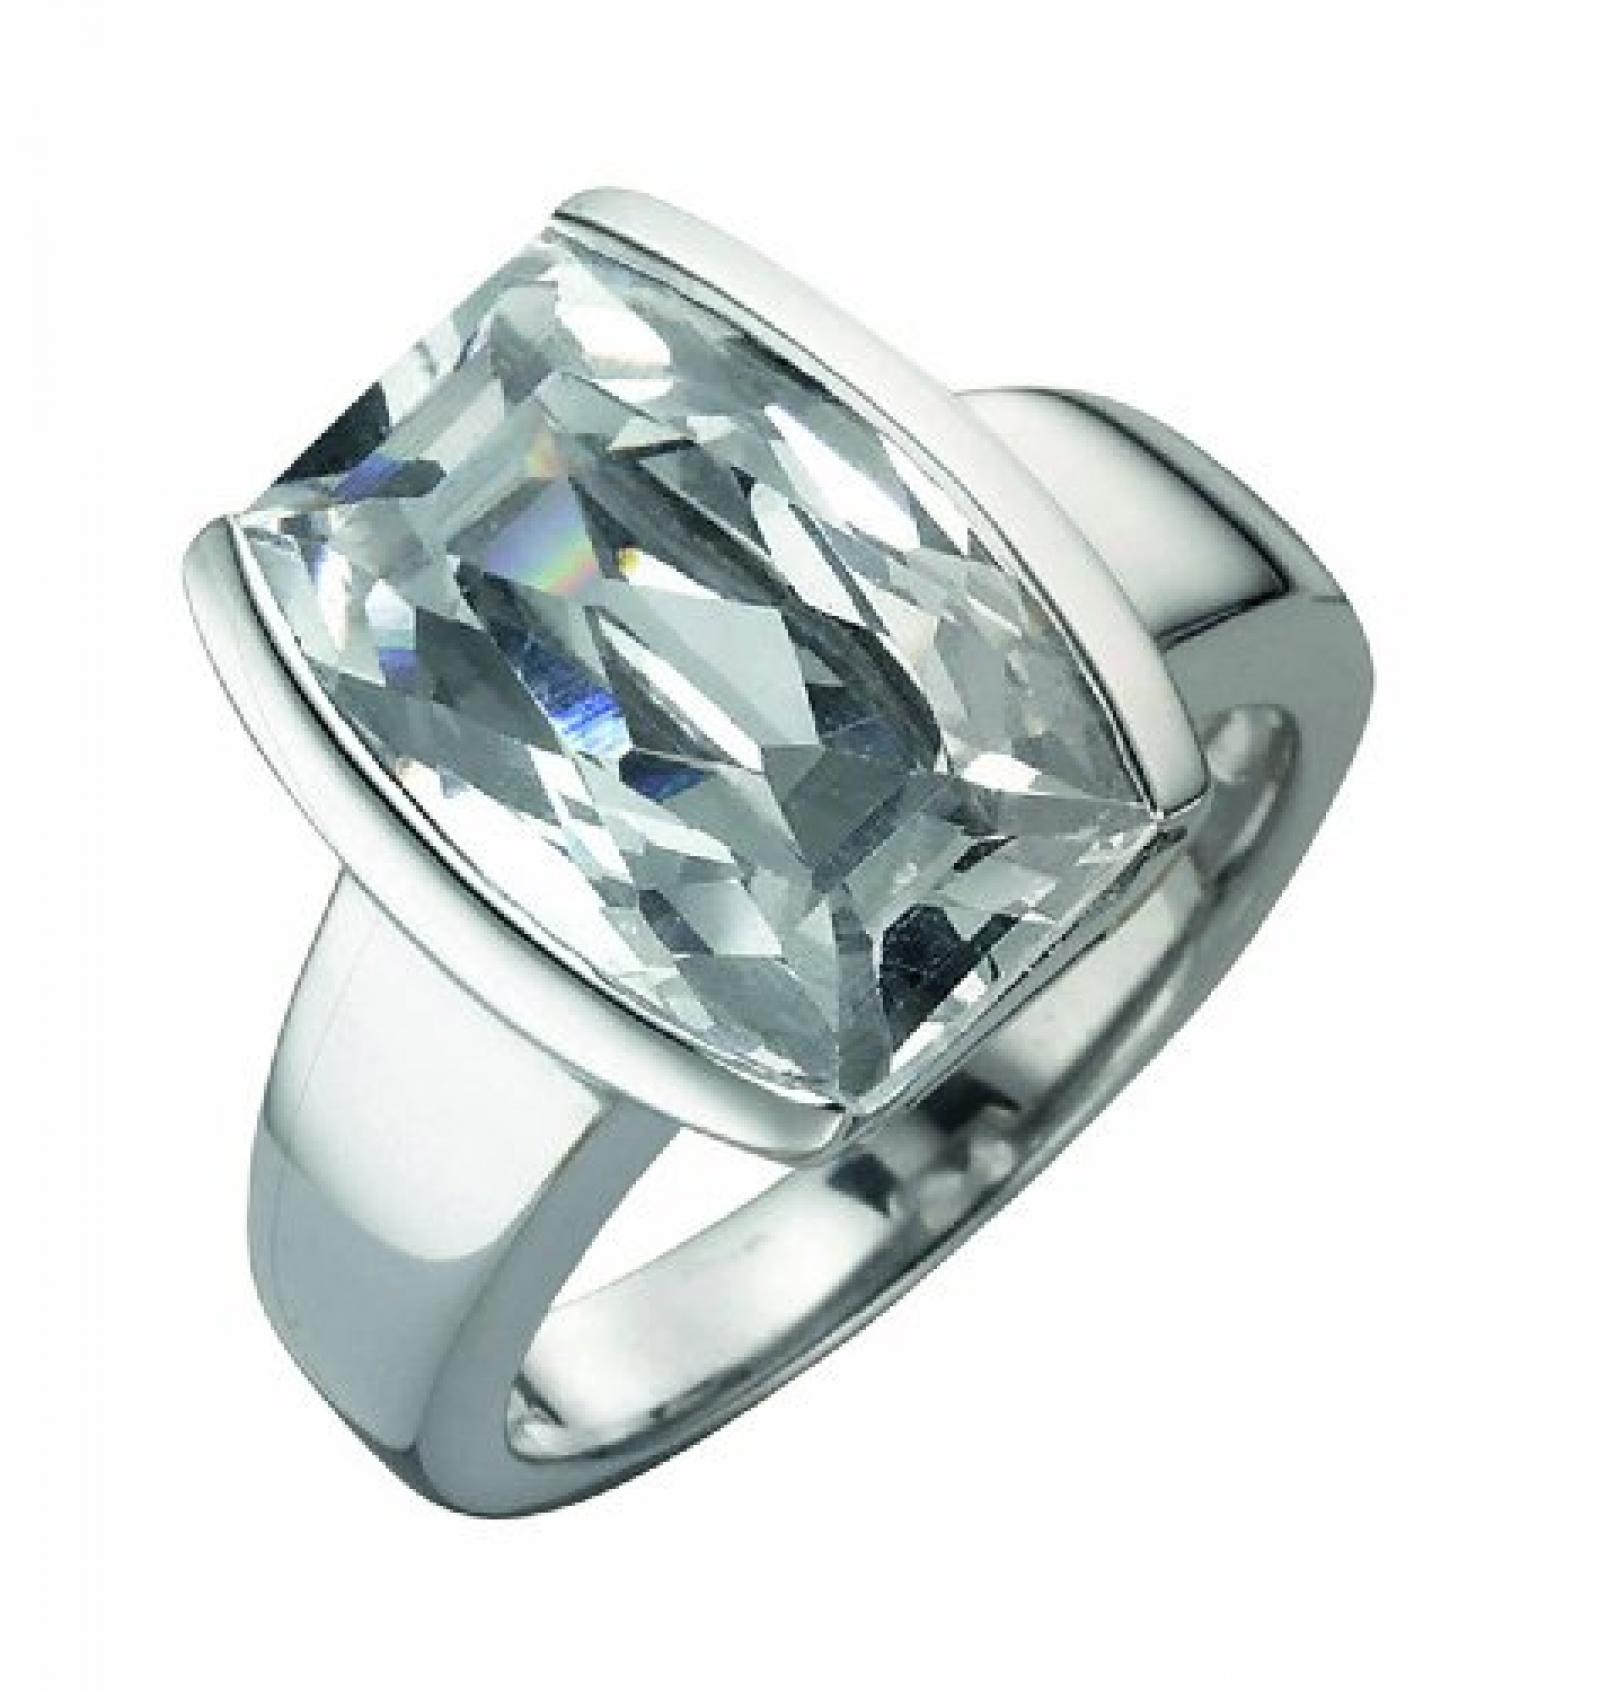 Celesta Damen-Ring 925 Sterling Silber Zirkonia weiß Gr. 57 (18.1) 273270779-9-018 